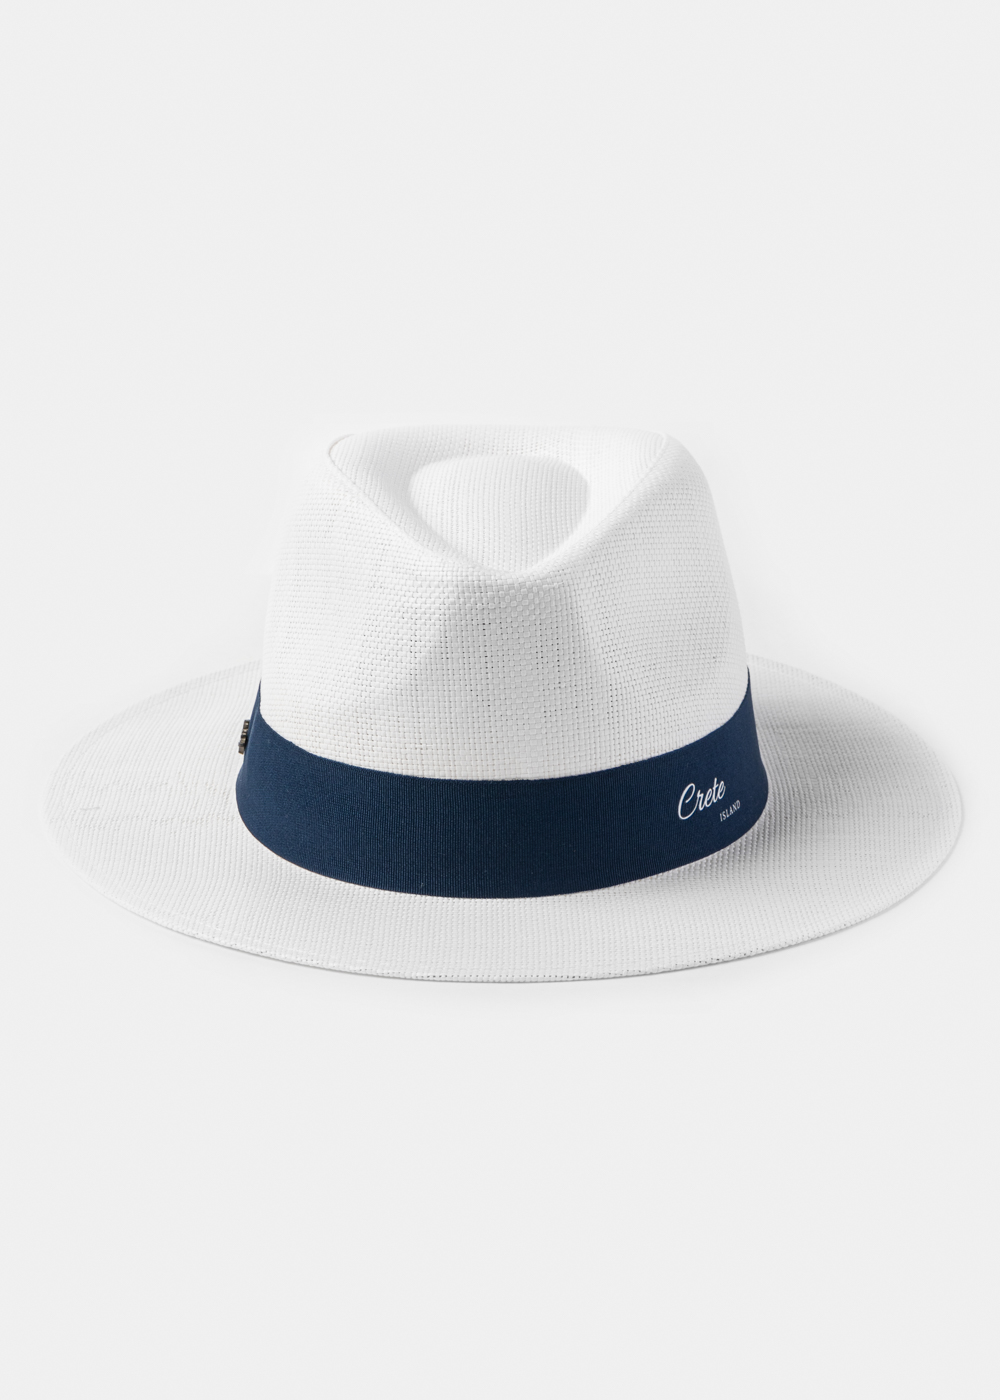 White "Crete" Panama Hat